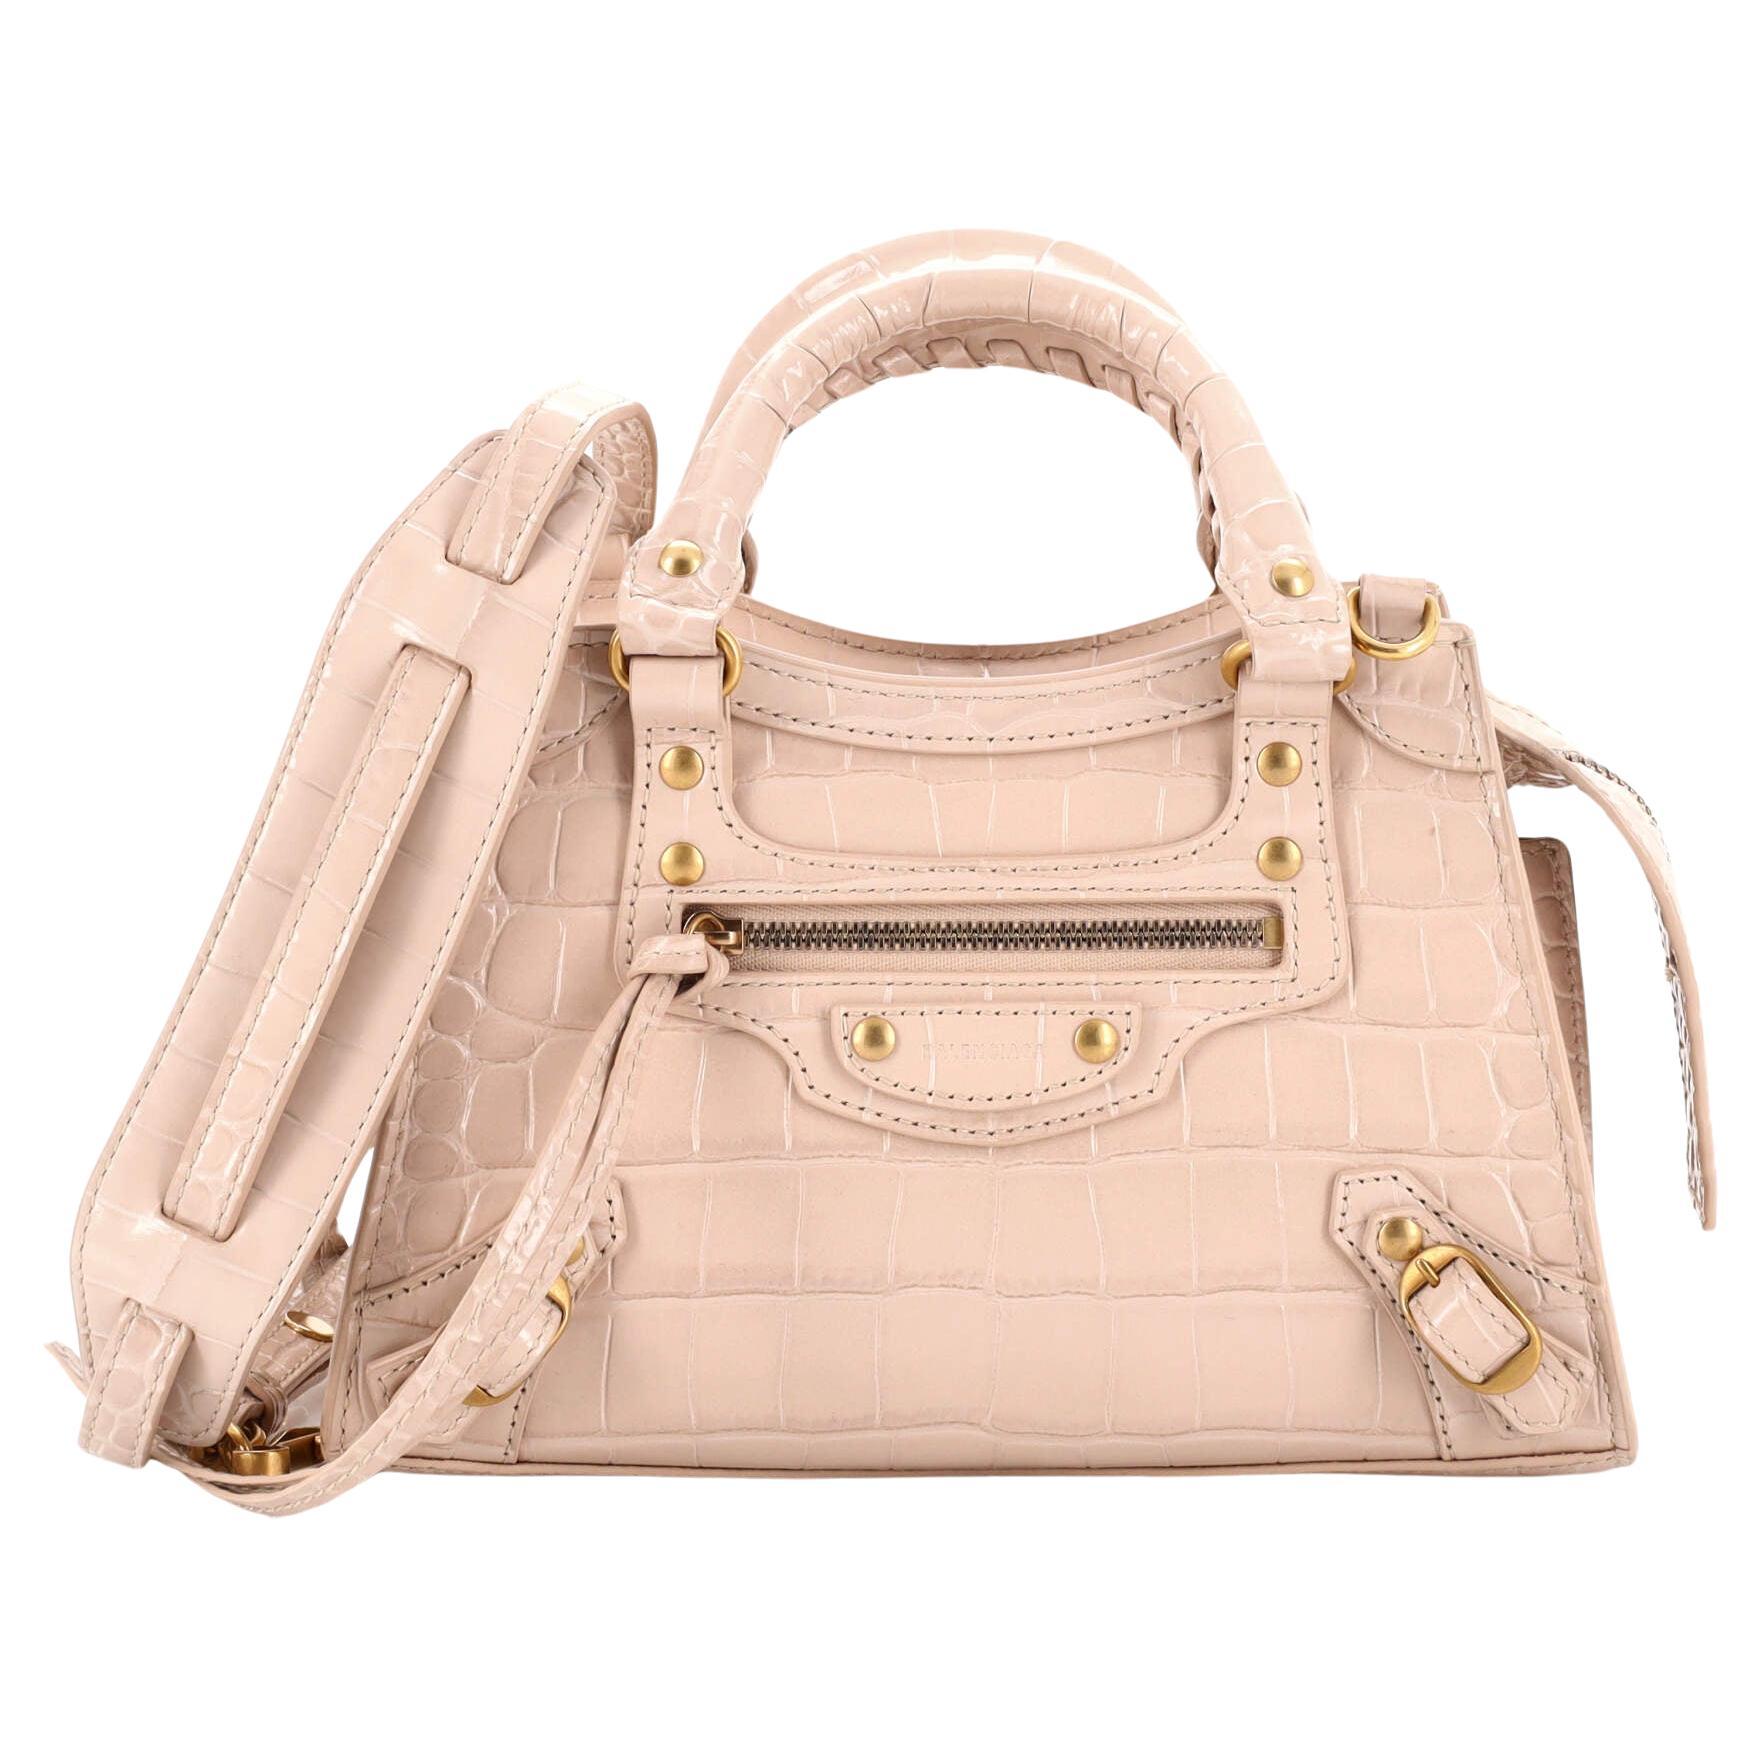 Balenciaga neo classic pink crocodile bag. RUNWAY EDITION